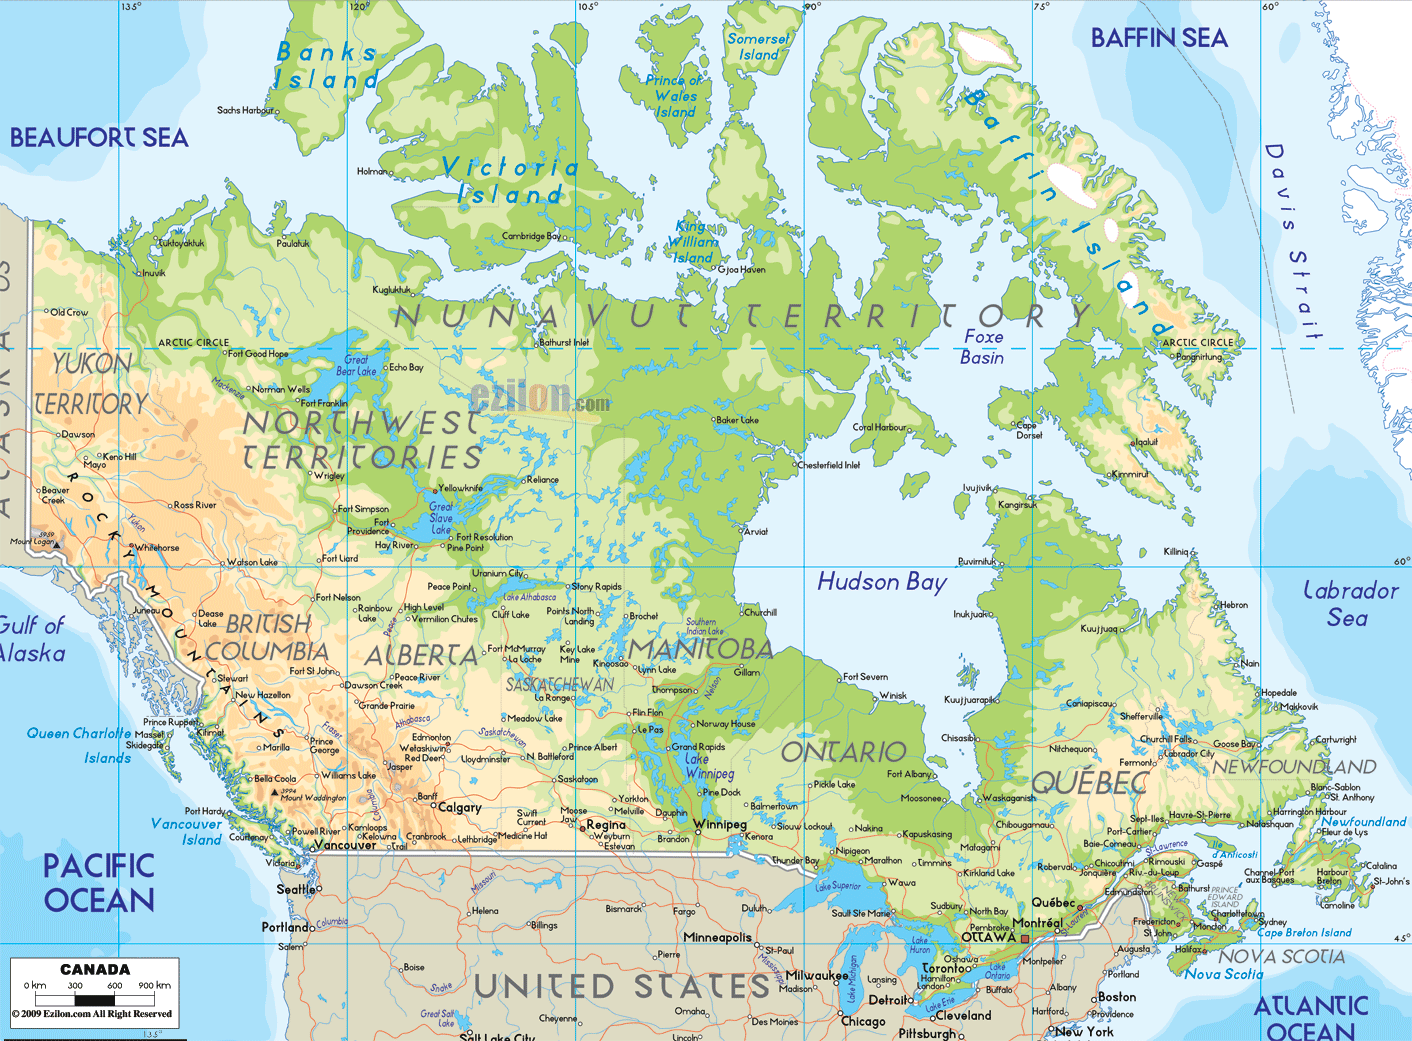 Mountains αποτελούν μια μεγάλη οροσειρά στις δυτικές ακτές του Ειρηνικού ξεκινώντας από τις 54 ο βόρεια με μέγιστο υψόμετρο που ξεπερνά τα 4000 m. Σχήμα 3.3: Γεωγραφικός χάρτης του Καναδά.